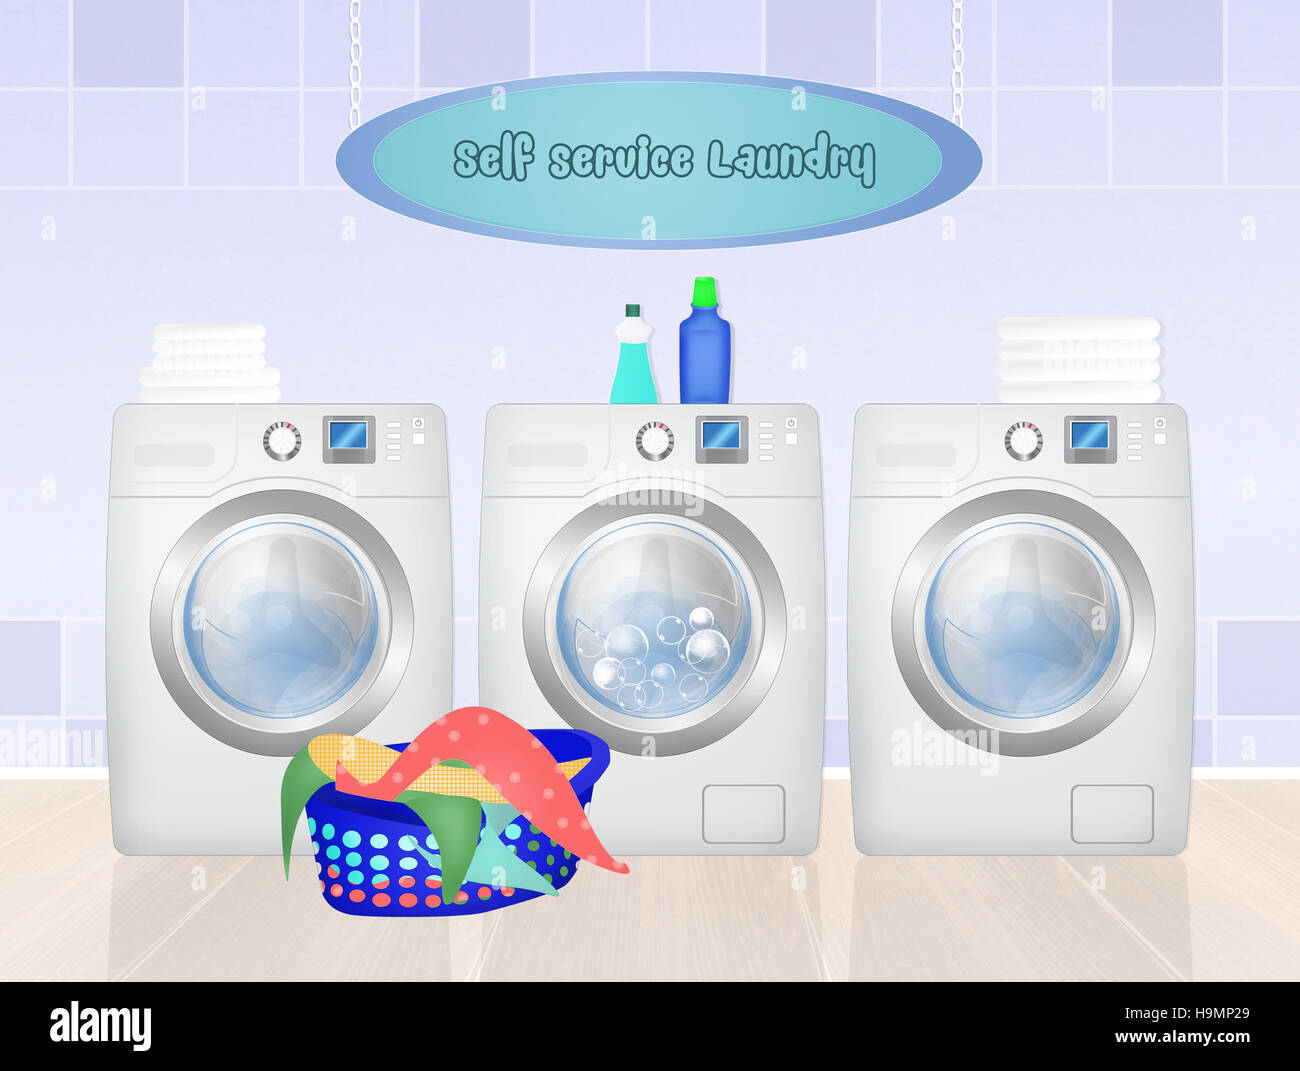 illustration of Laundry service Stock Photo